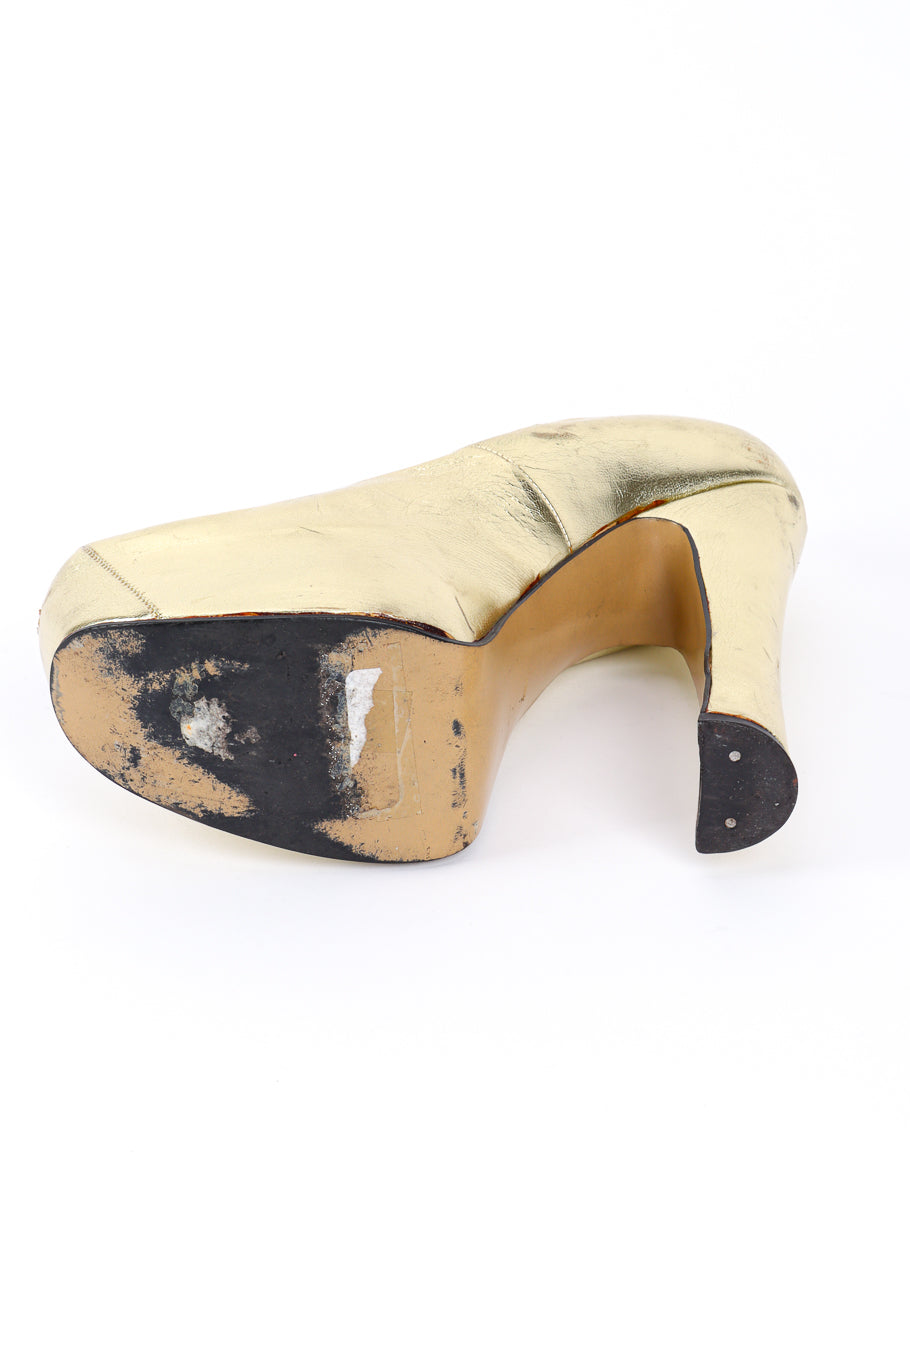 Vintage Vivienne Westwood 1993 F/W Metallic Gold Elevated Court Shoe right shoe outsole @recessla 